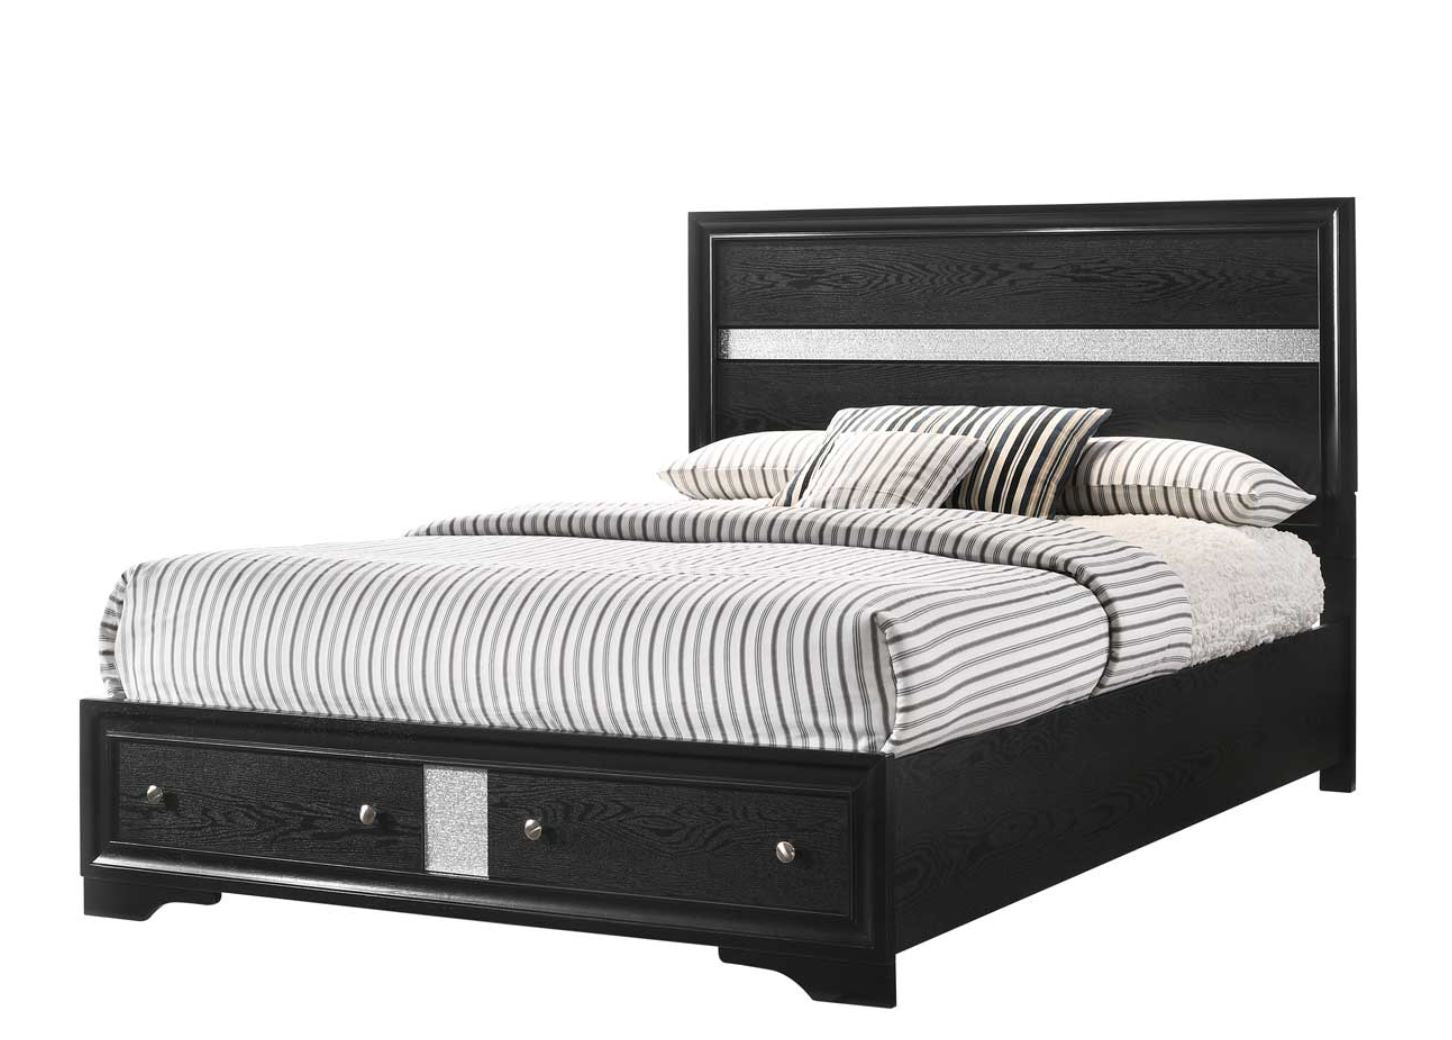 Regata Modern Black and Silver 5 Piece Queen Bedroom Set